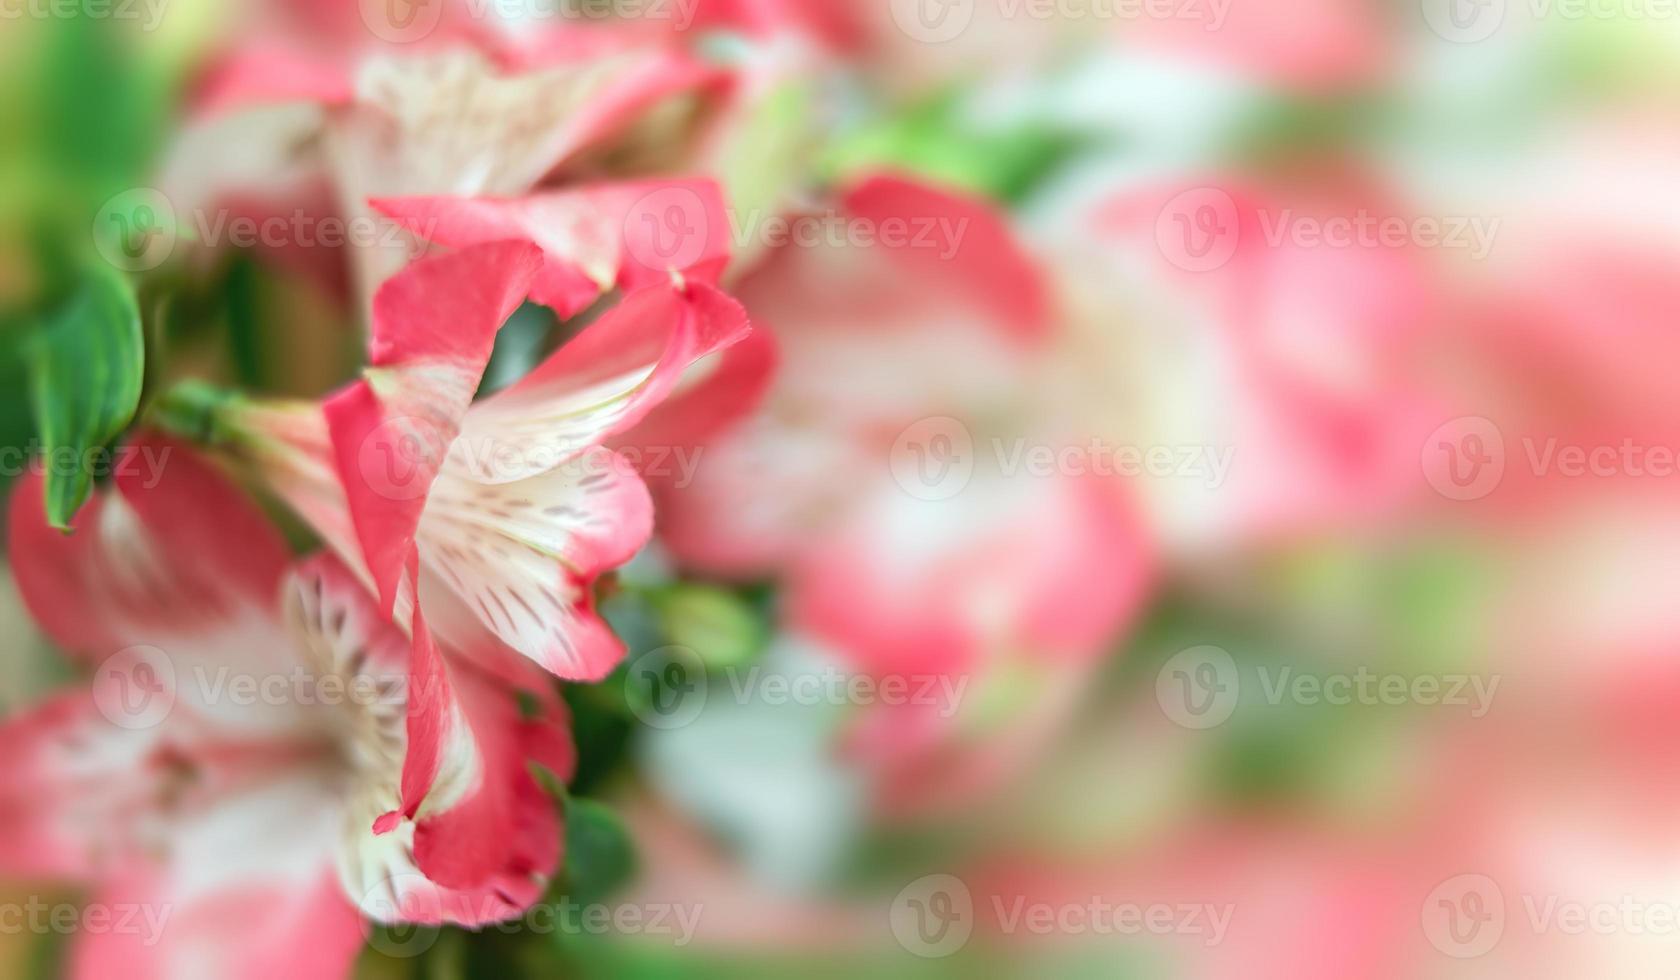 alstroemeria blommor bakgrund foto